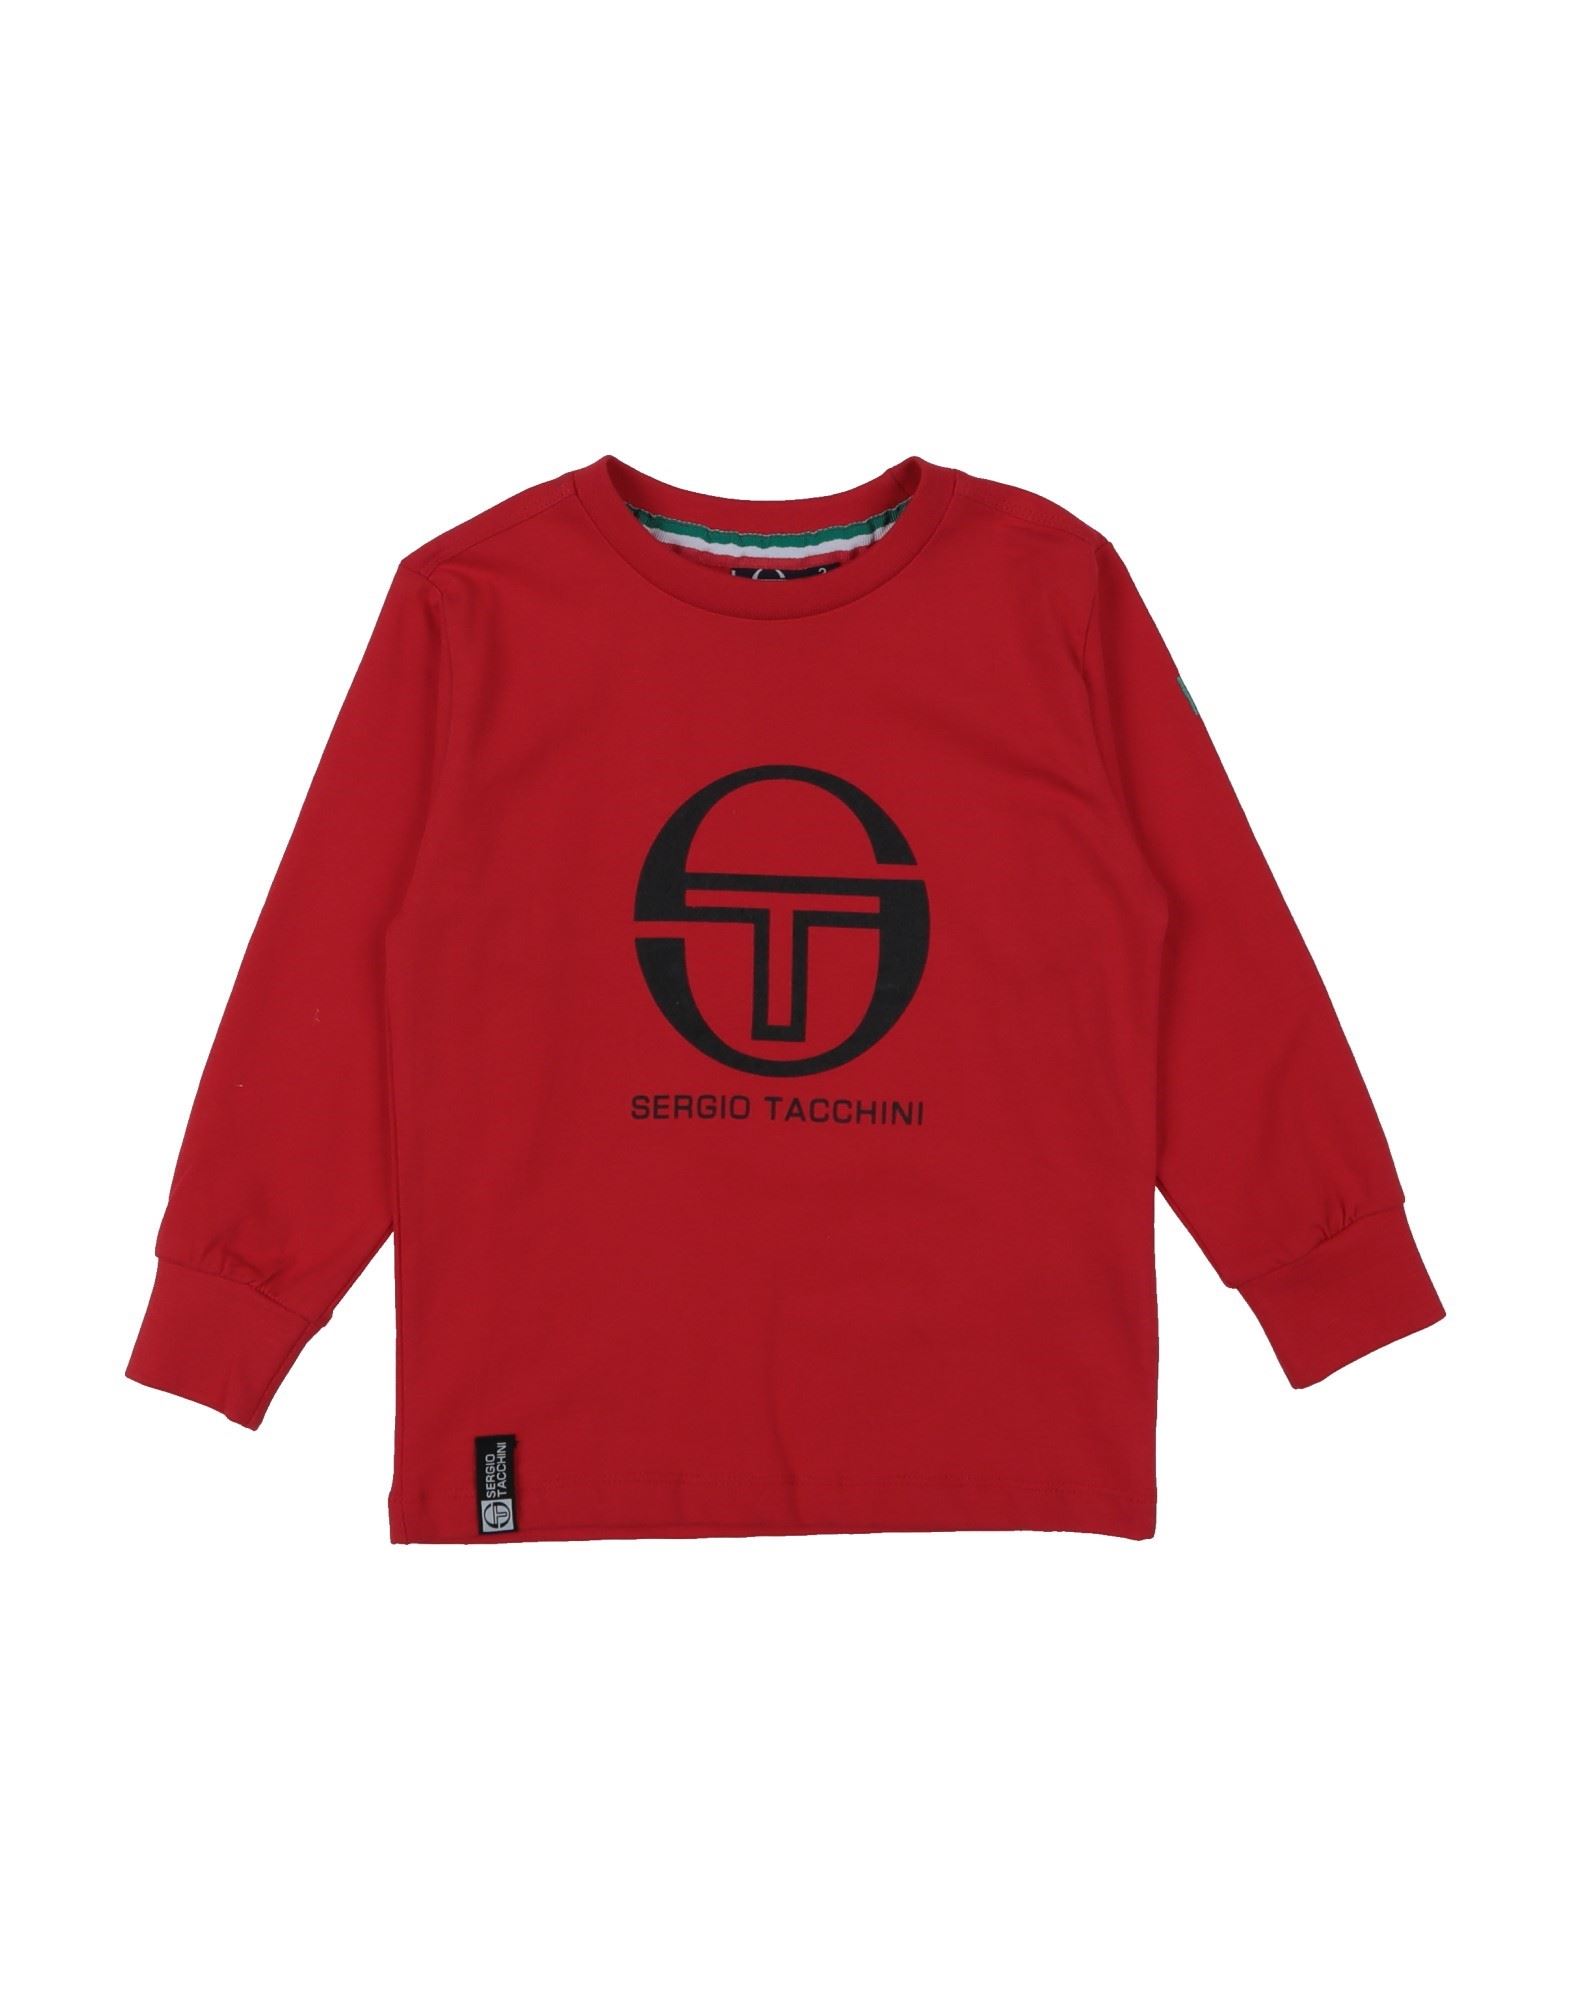 Sergio Tacchini Kids' T-shirts In Red